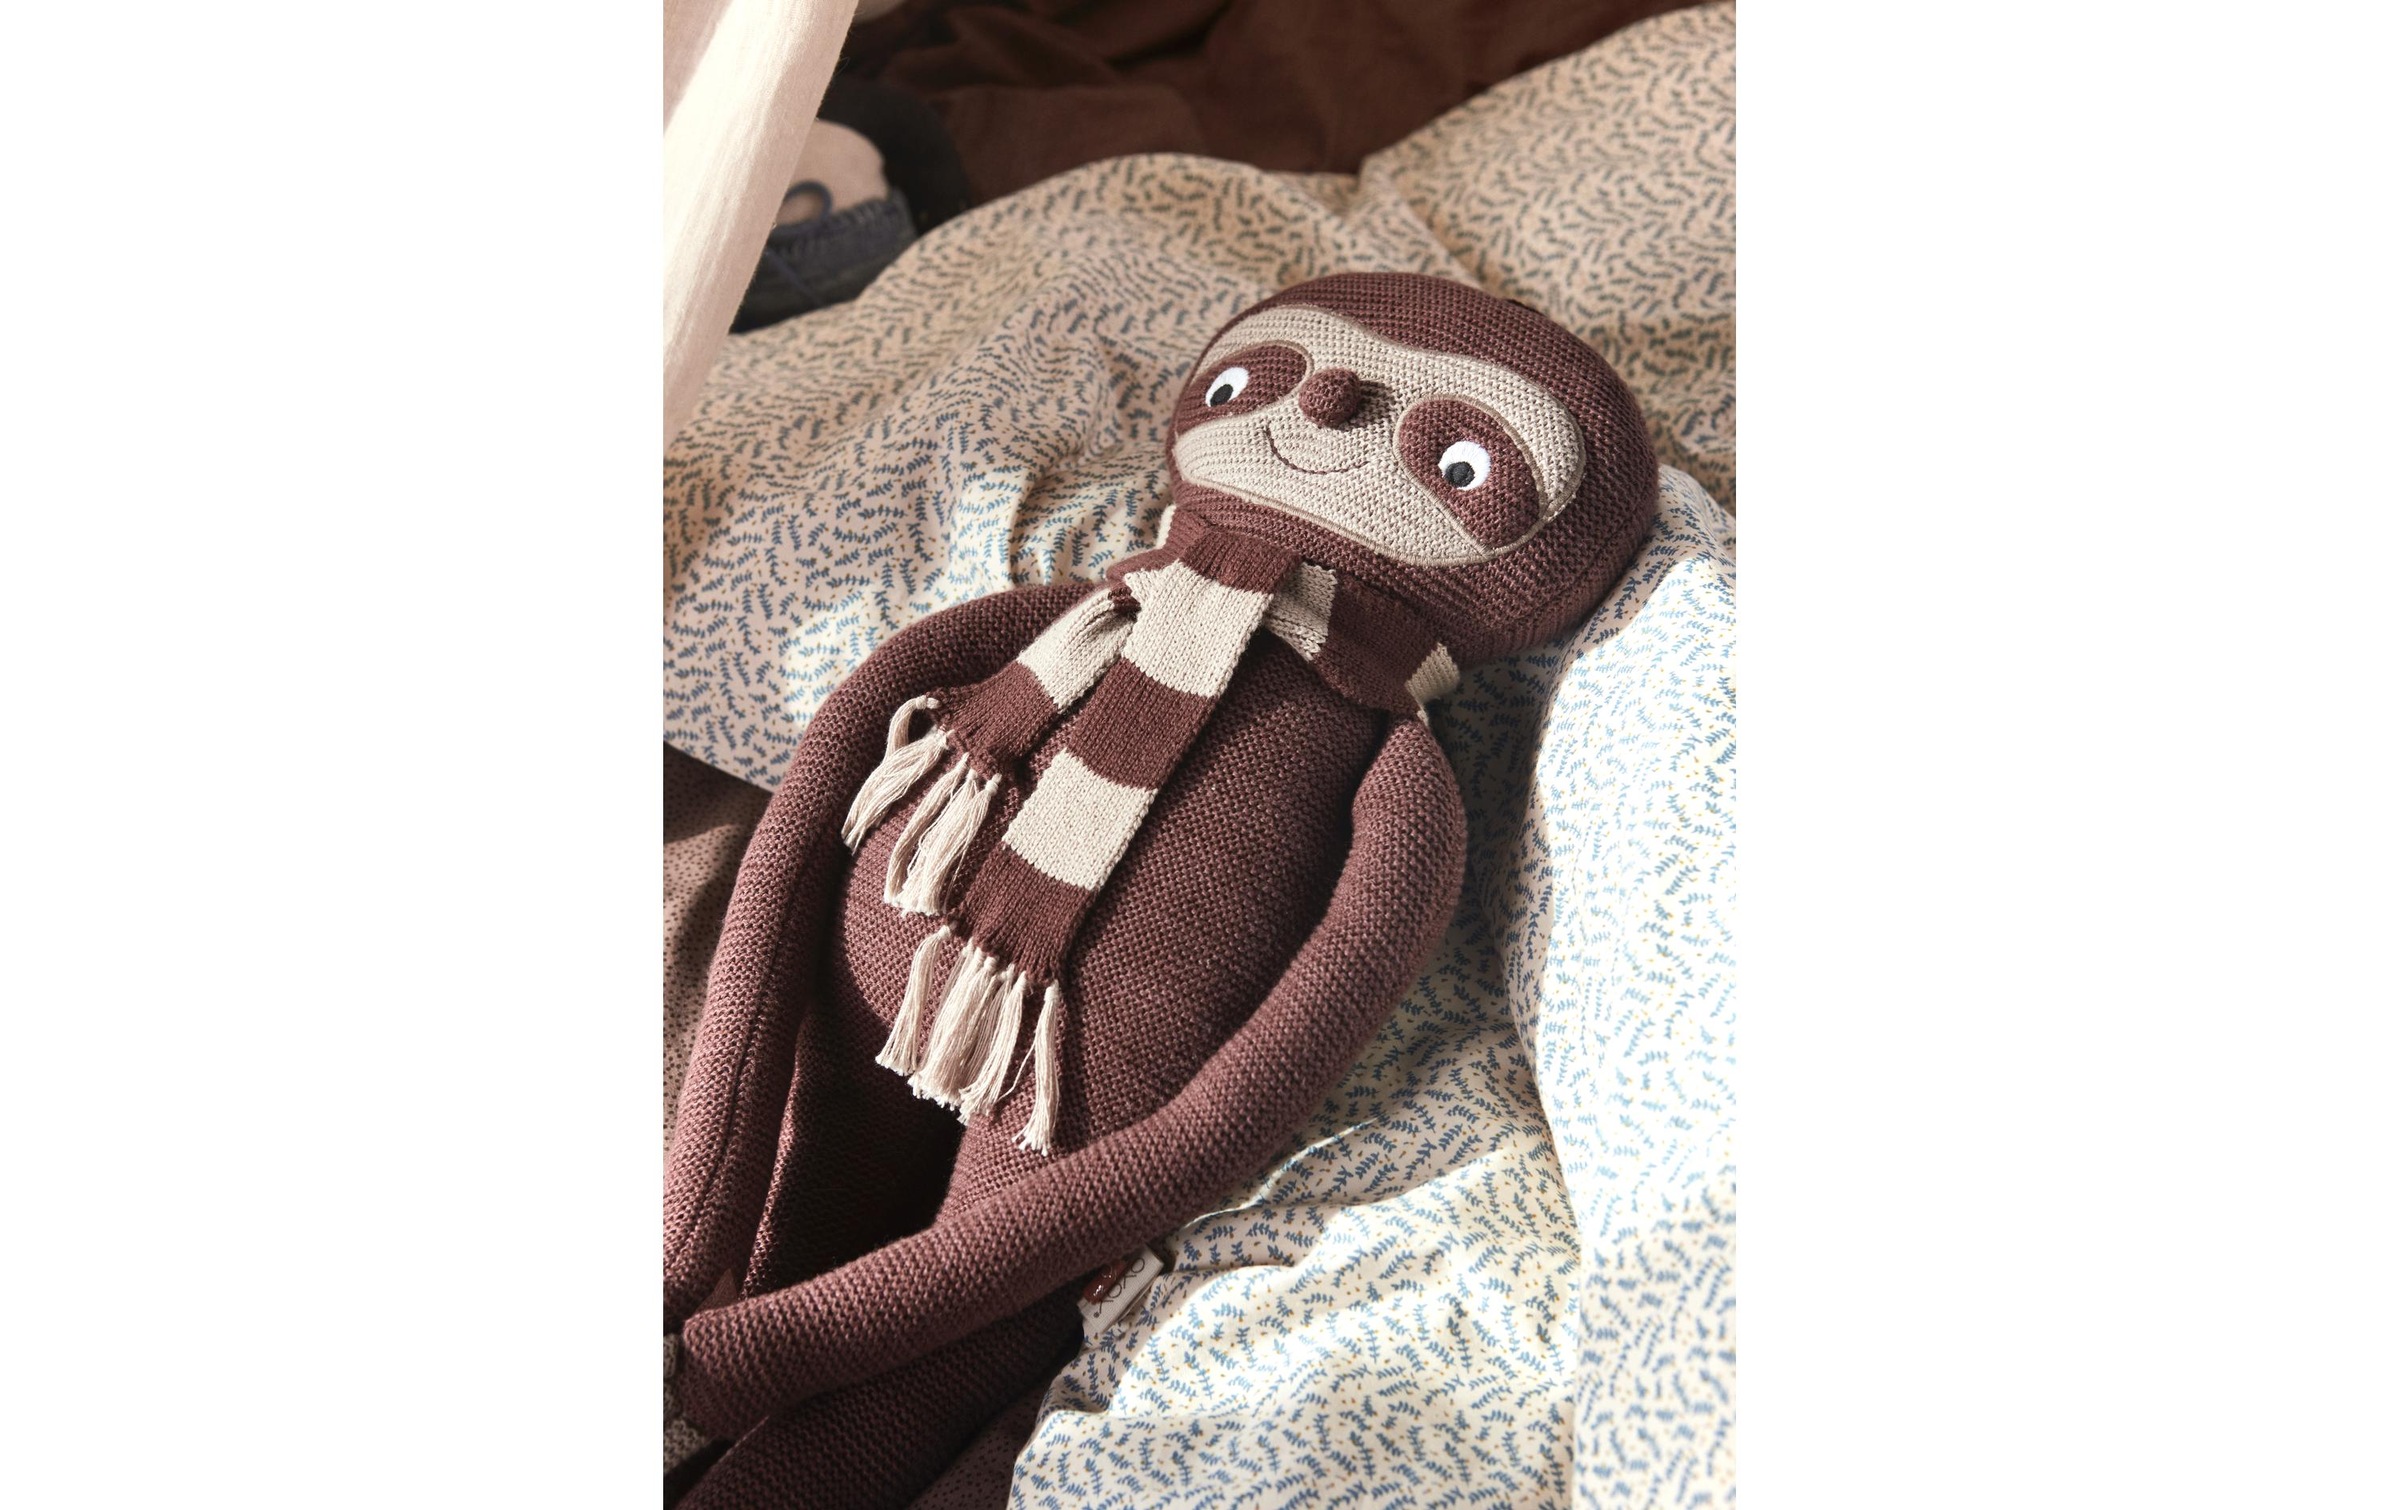 OYOY Plüschfigur »Melvin Sloth 52 cm«